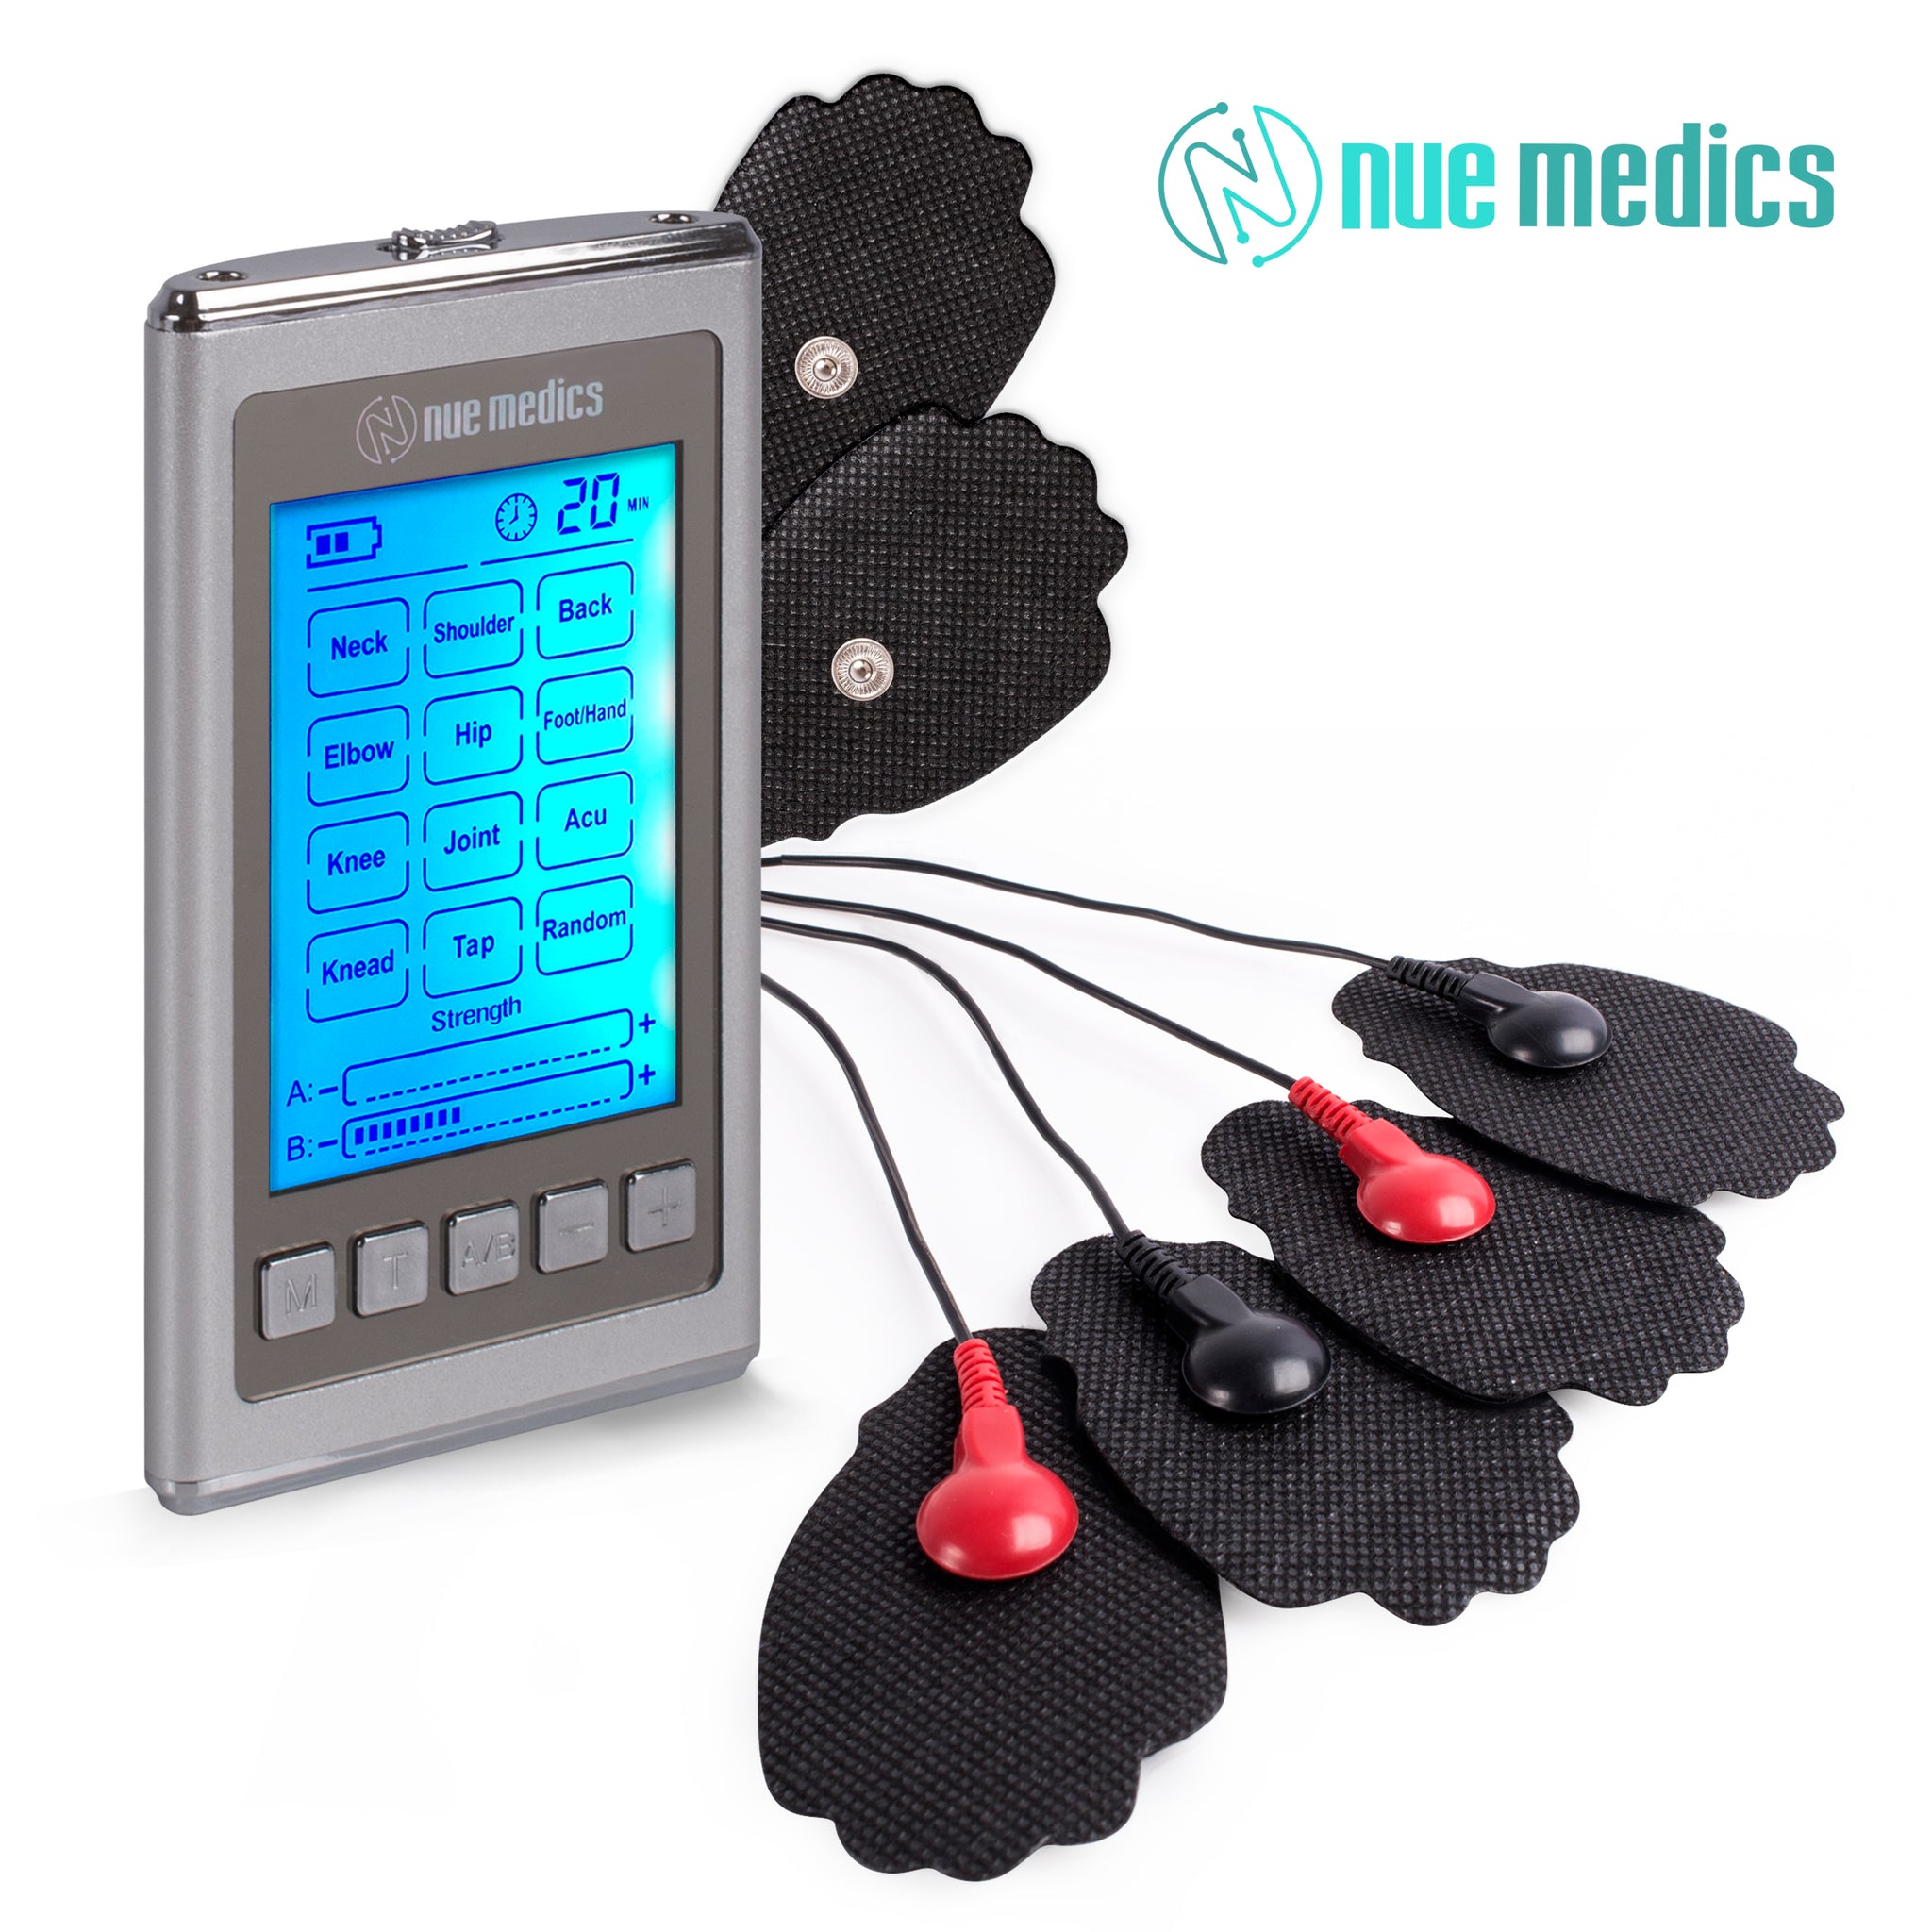 Electric Pulse Massager Tens EMS Muscle Stimulator 12Modes Digital